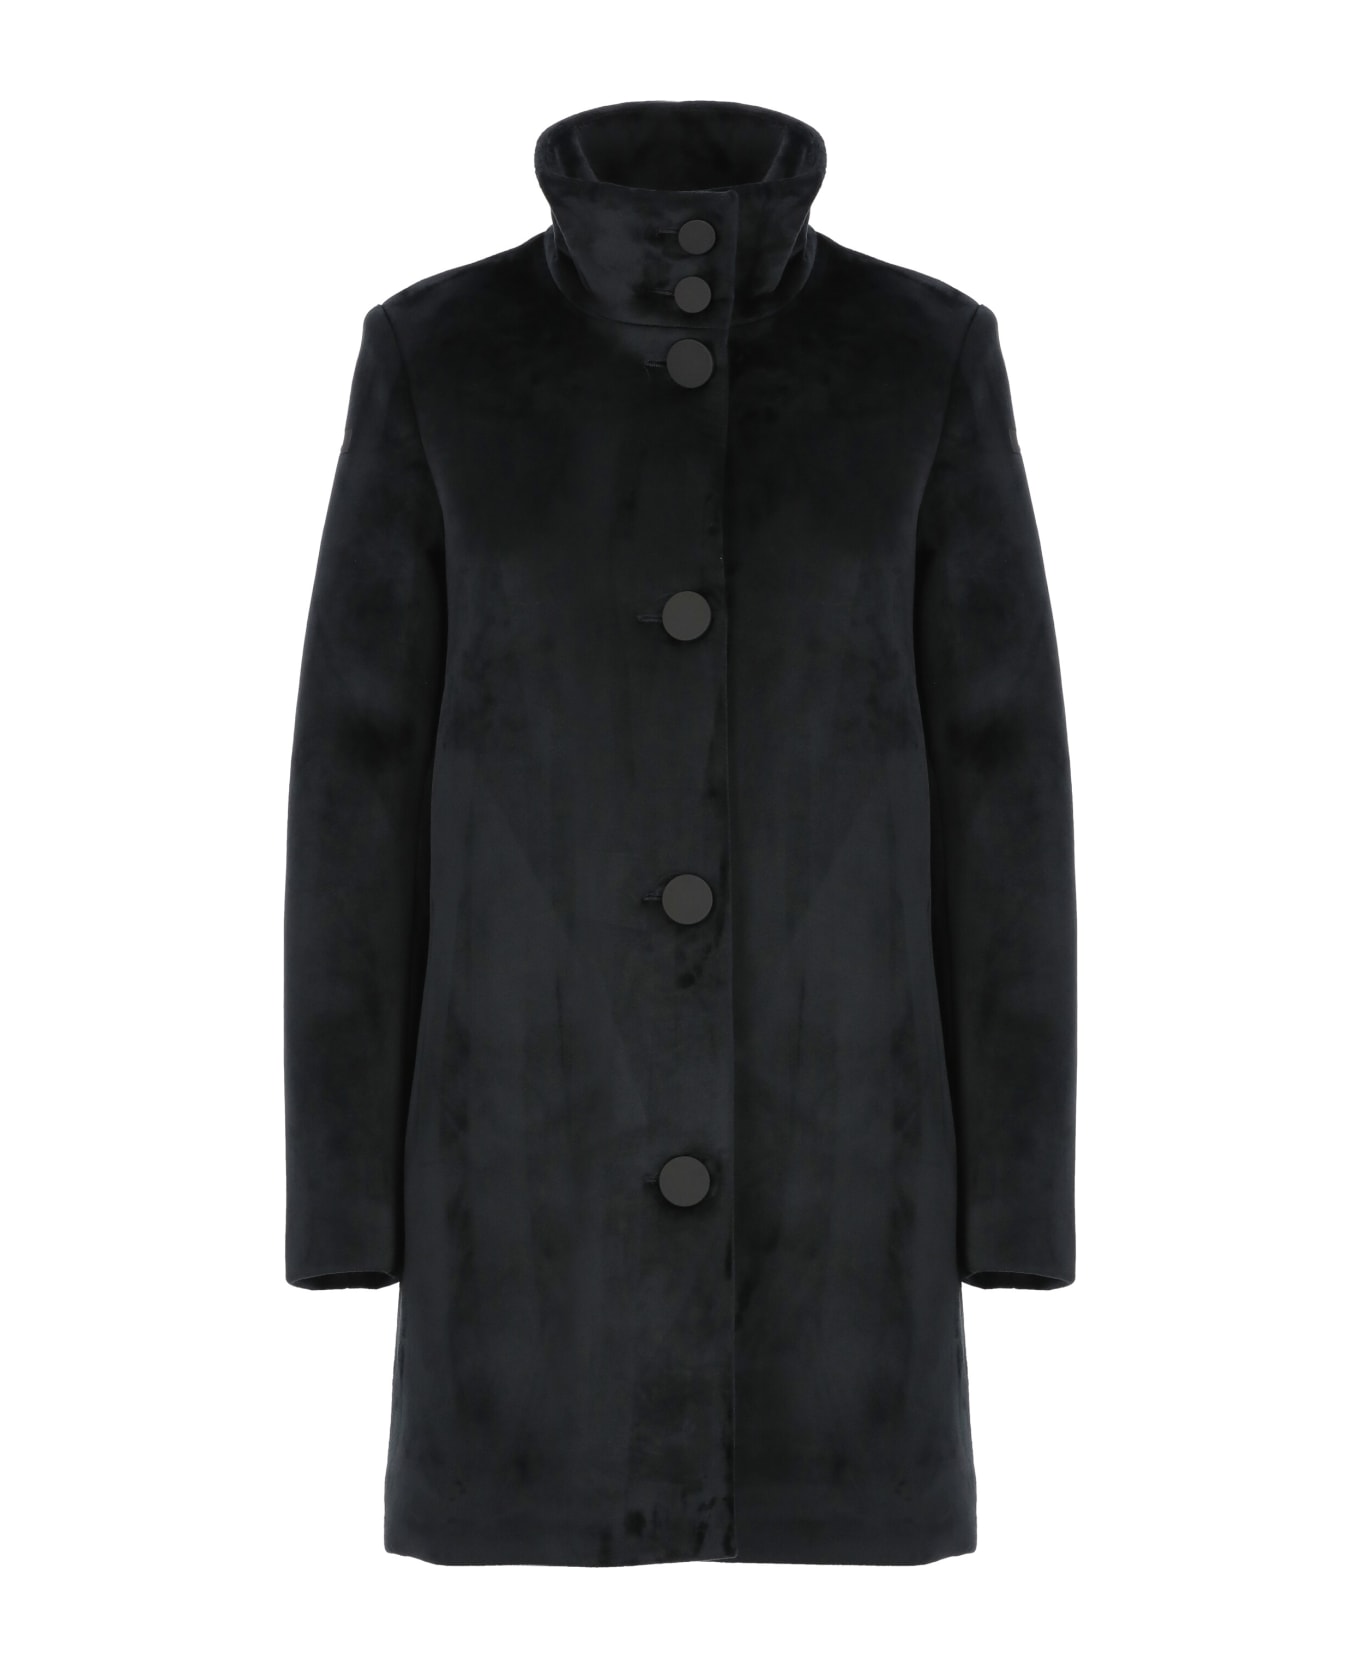 RRD - Roberto Ricci Design Velvet Neo Wom Coat Coat - NERO コート